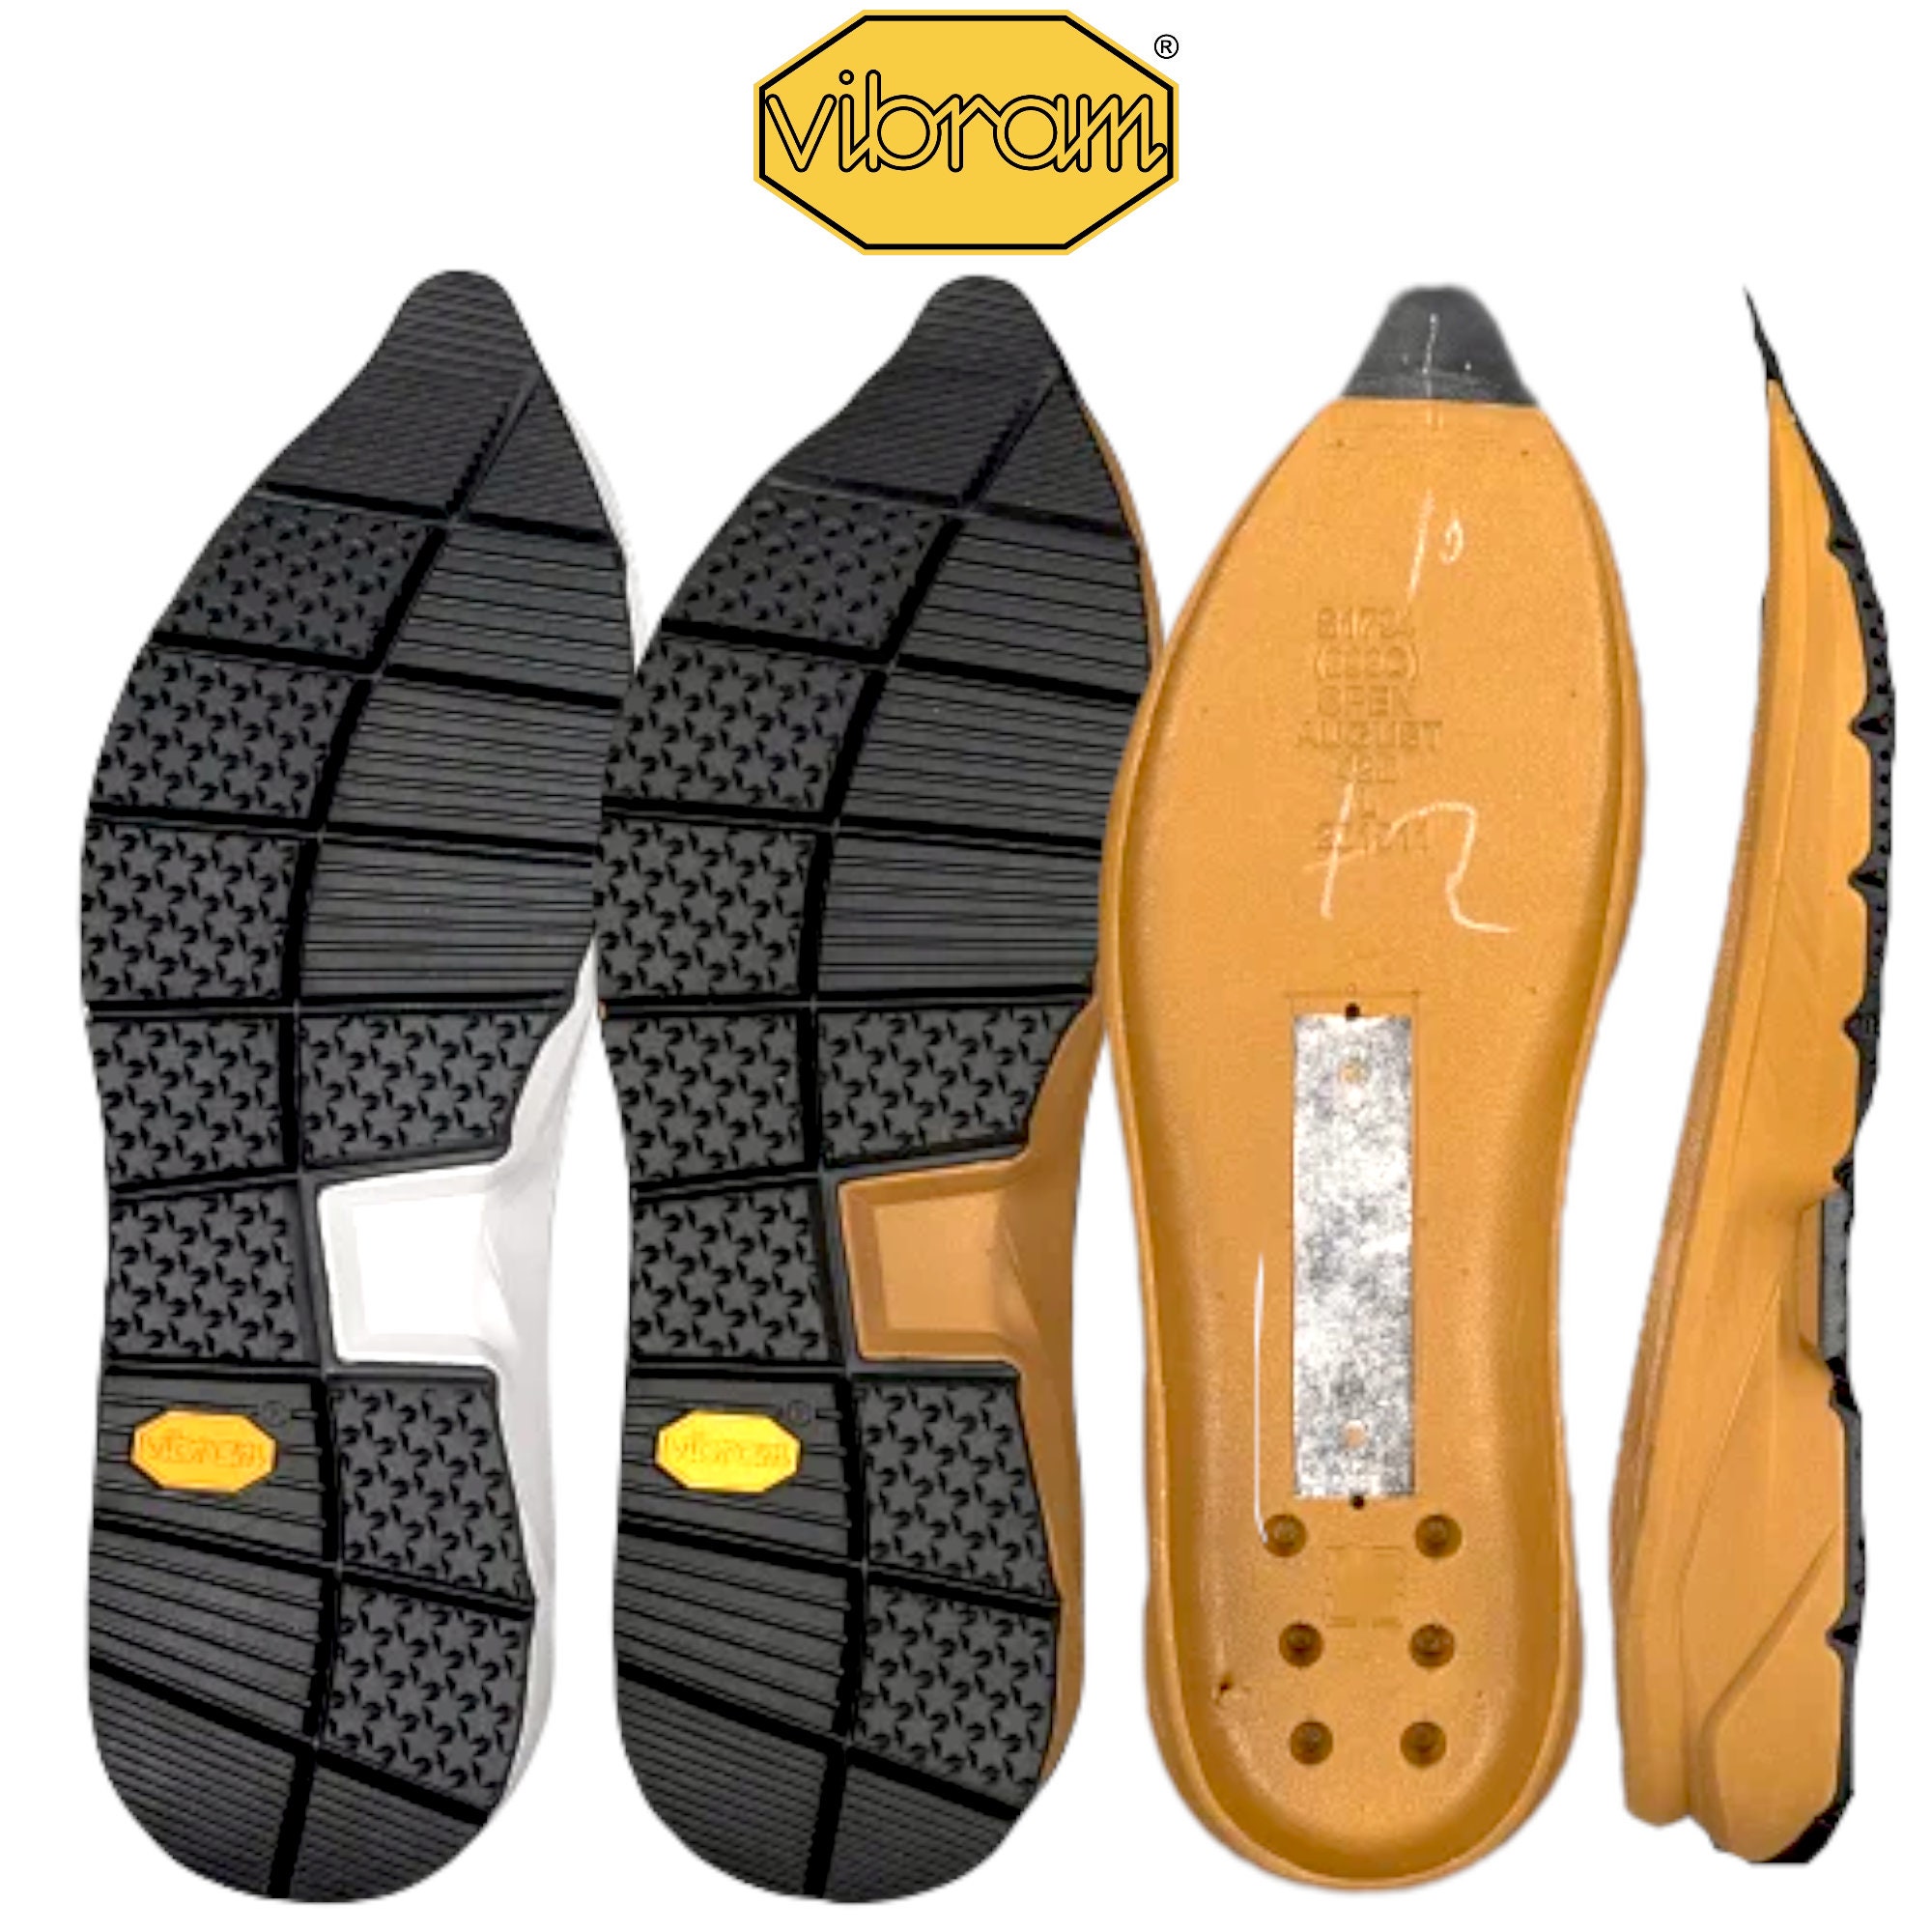 Vibram AUGUST 893CS Shoe Sole, Manufacturing Sneakers, Shoe Repair 